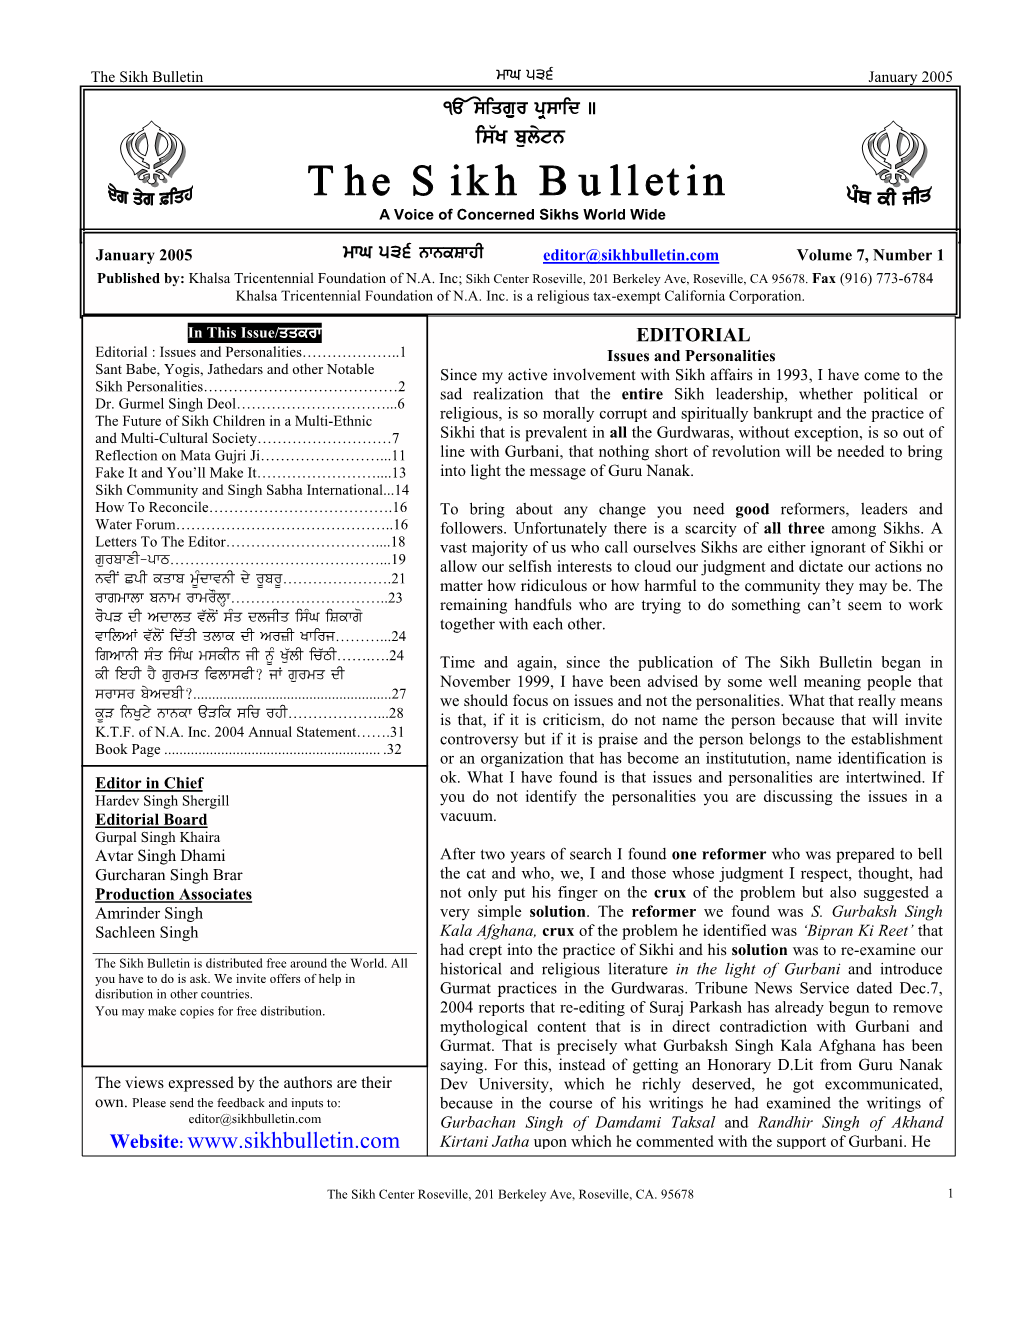 The Sikh Bulletin Mwg 536 January 2005